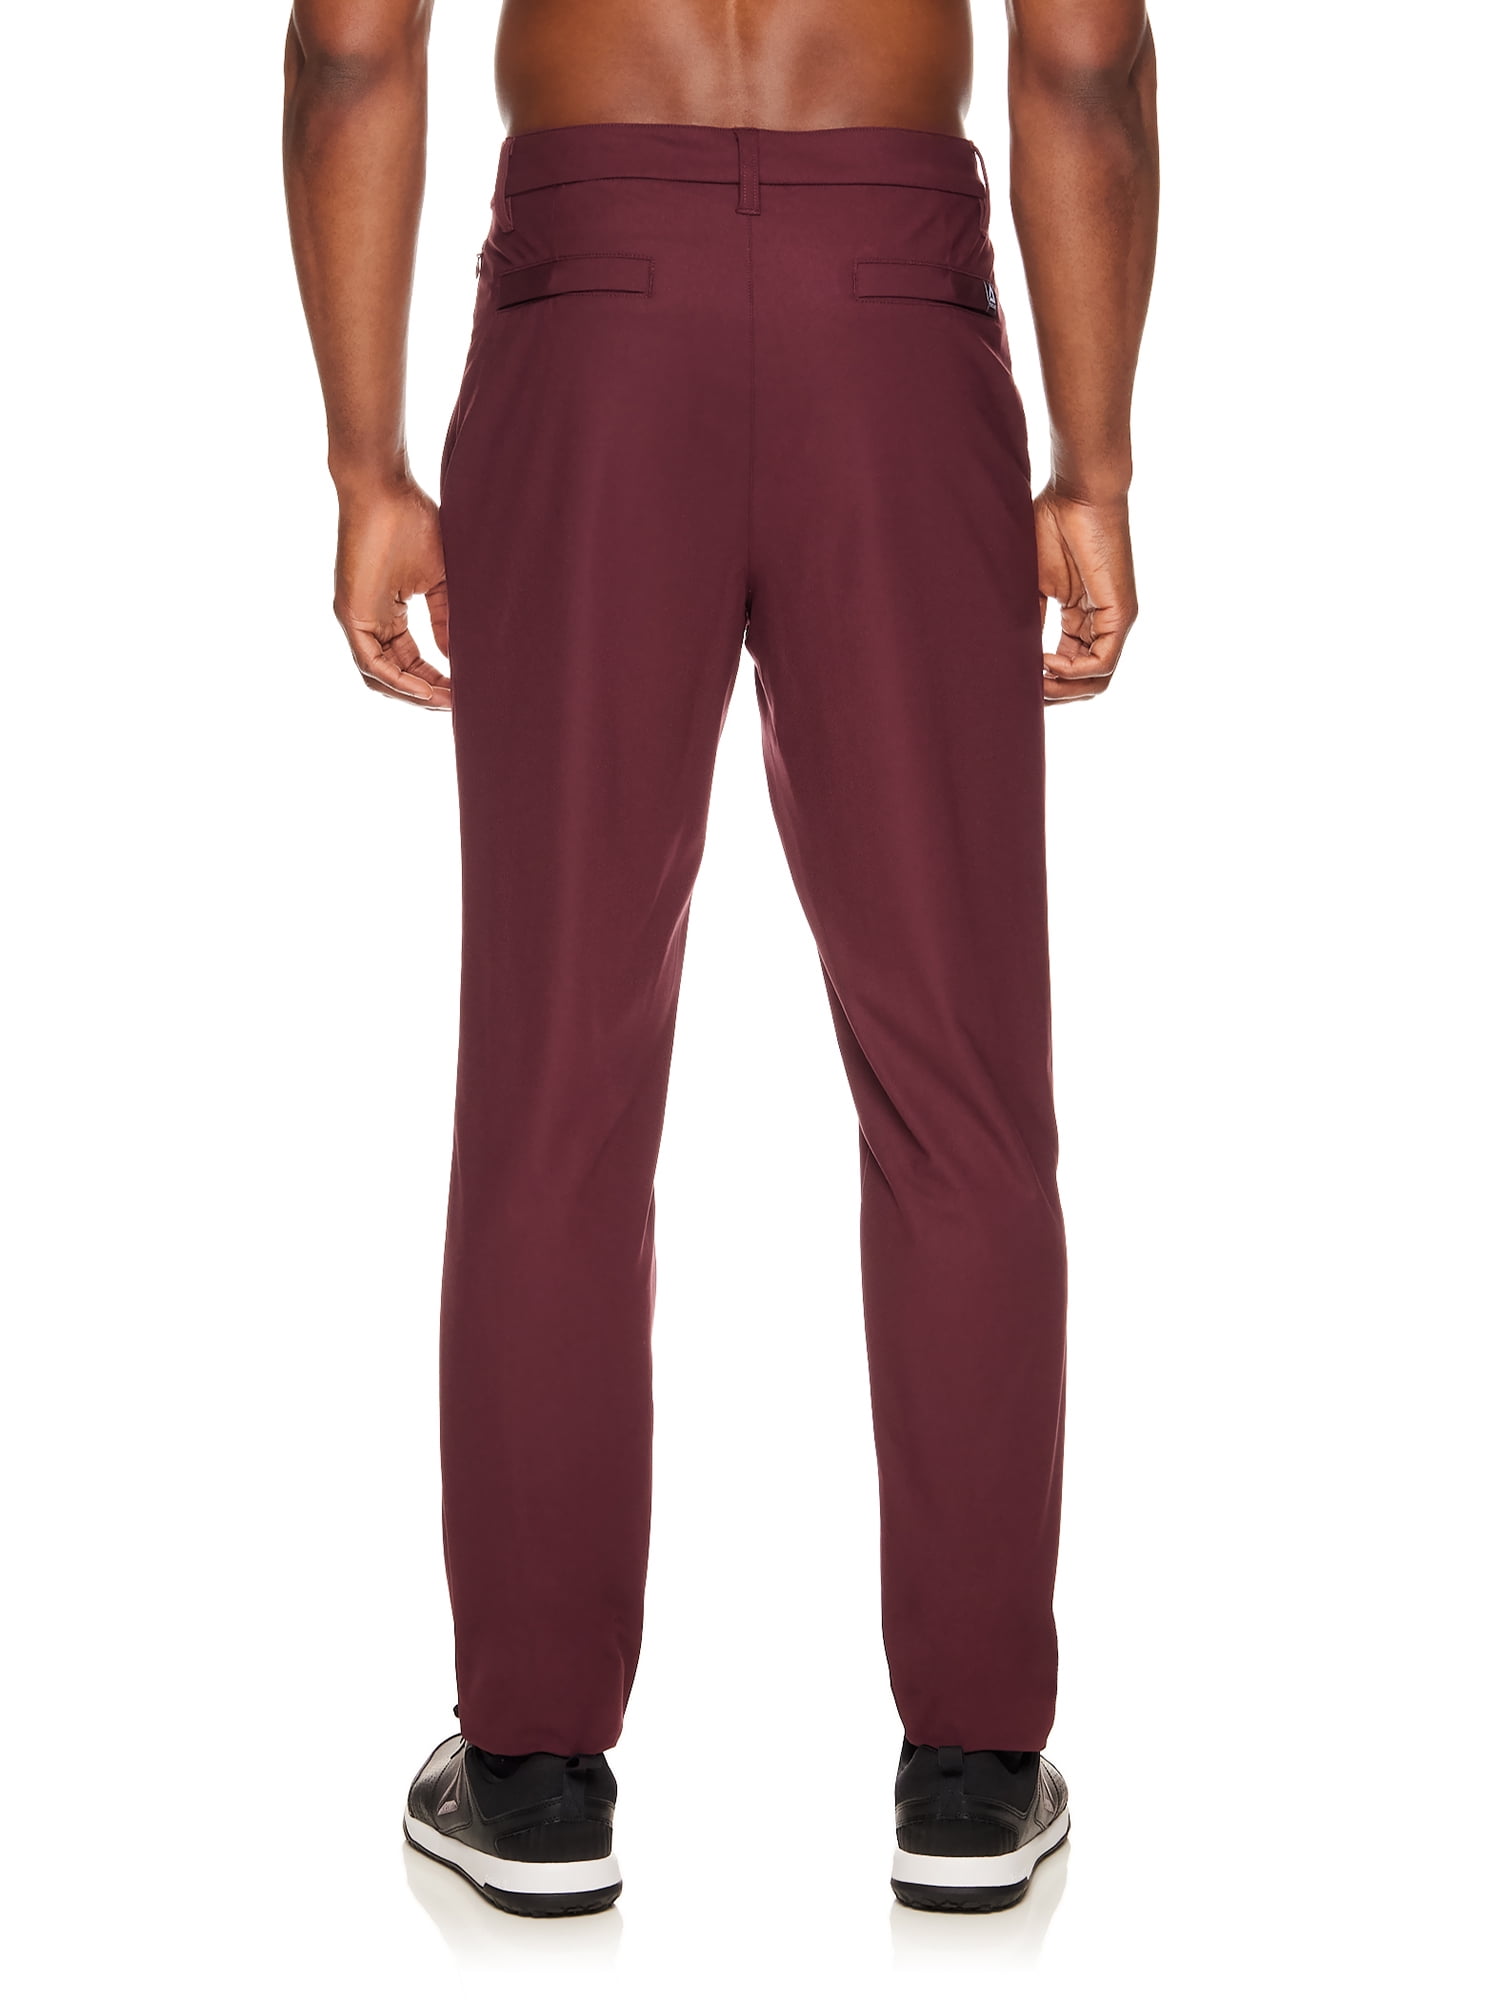 Reebok Men's Anchor 5 Pocket Pants, up to size 3XL 